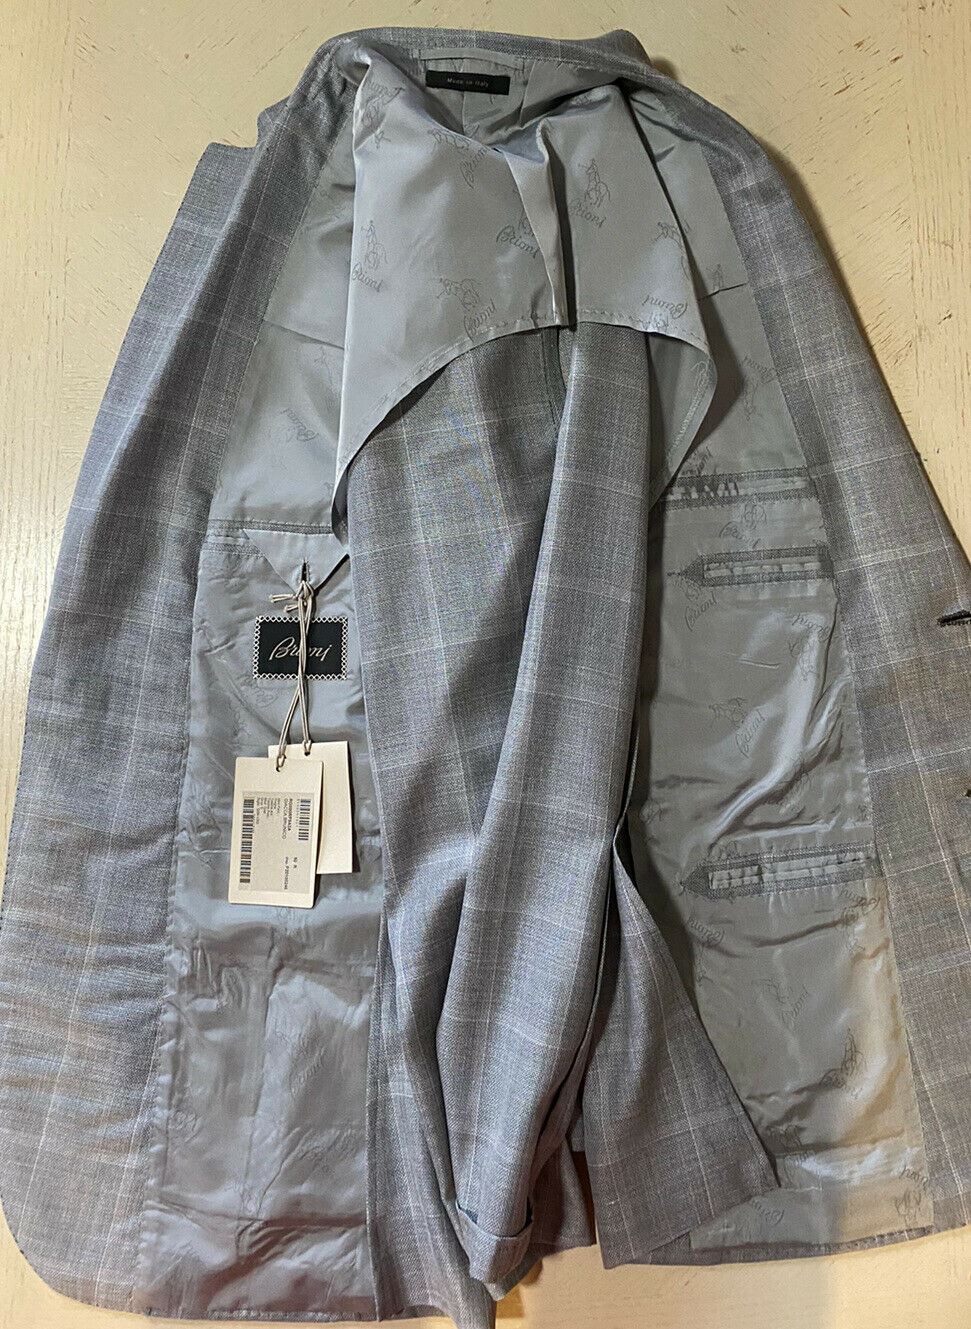 NWT $5900 Brioni Men’s Wool Sport Coat Blazer Jacket Gray 40R US/50R Eu Italy